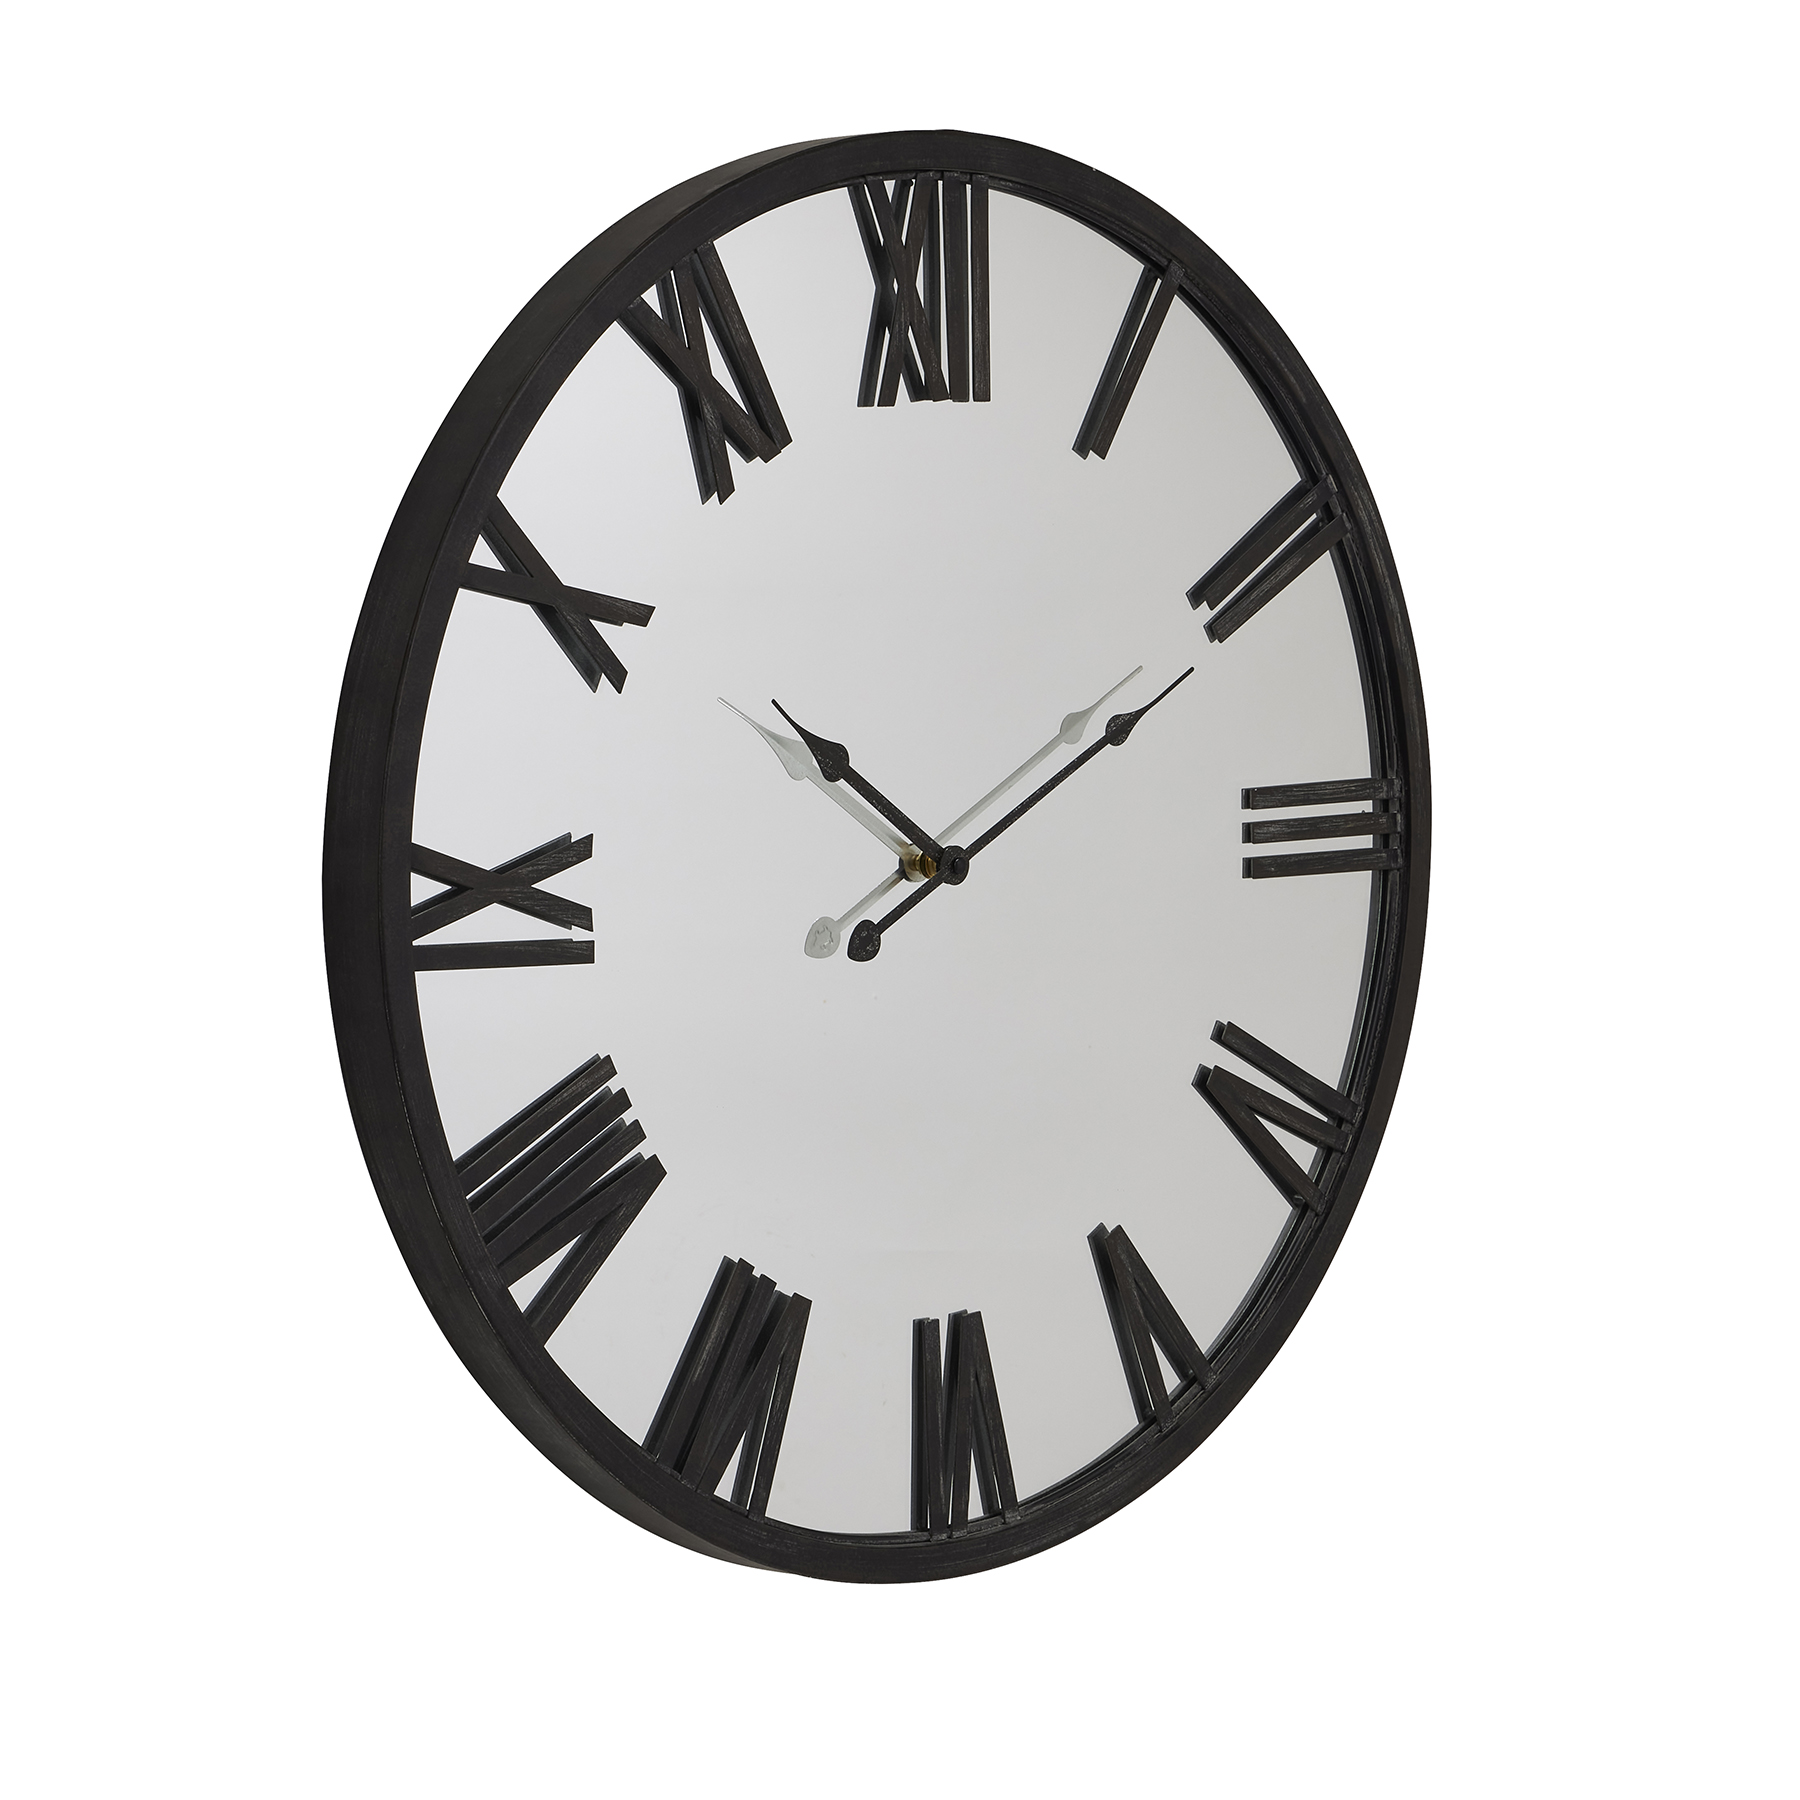 Marston Mirrored Wall Clock - Image 1